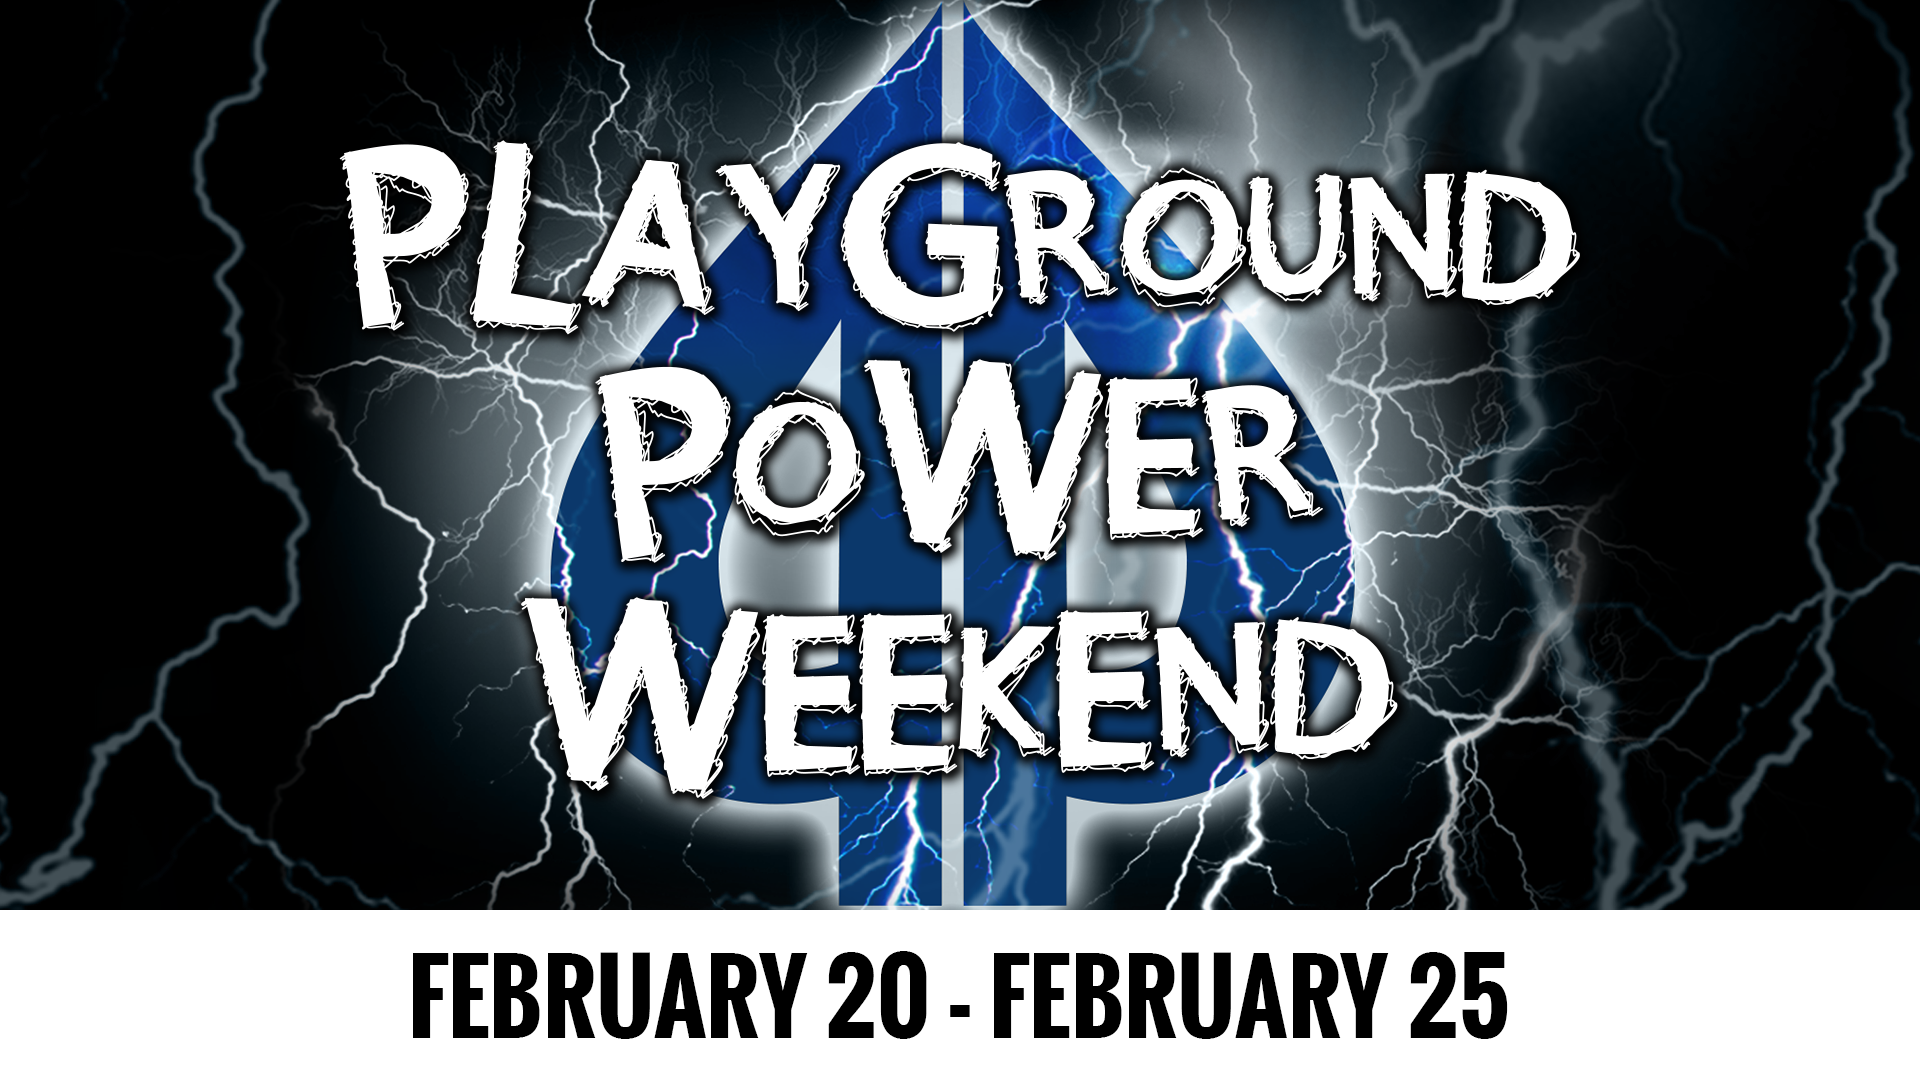 Playground Power Weekend February 2019